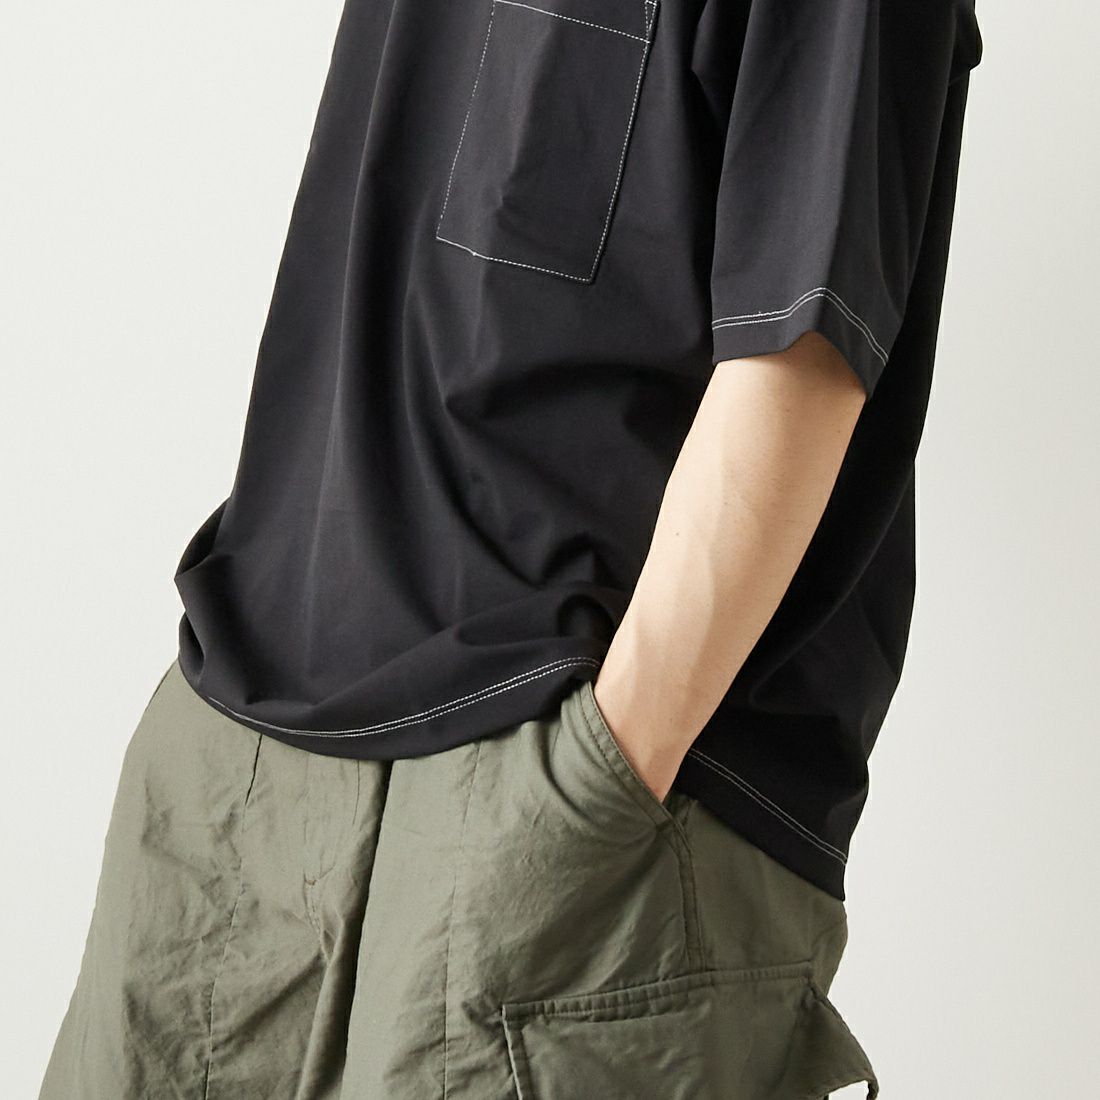 Jeans Factory Clothes [ジーンズファクトリークローズ] AIR POLY 天竺クルーネックTシャツ [JFC-232-012] BLACK